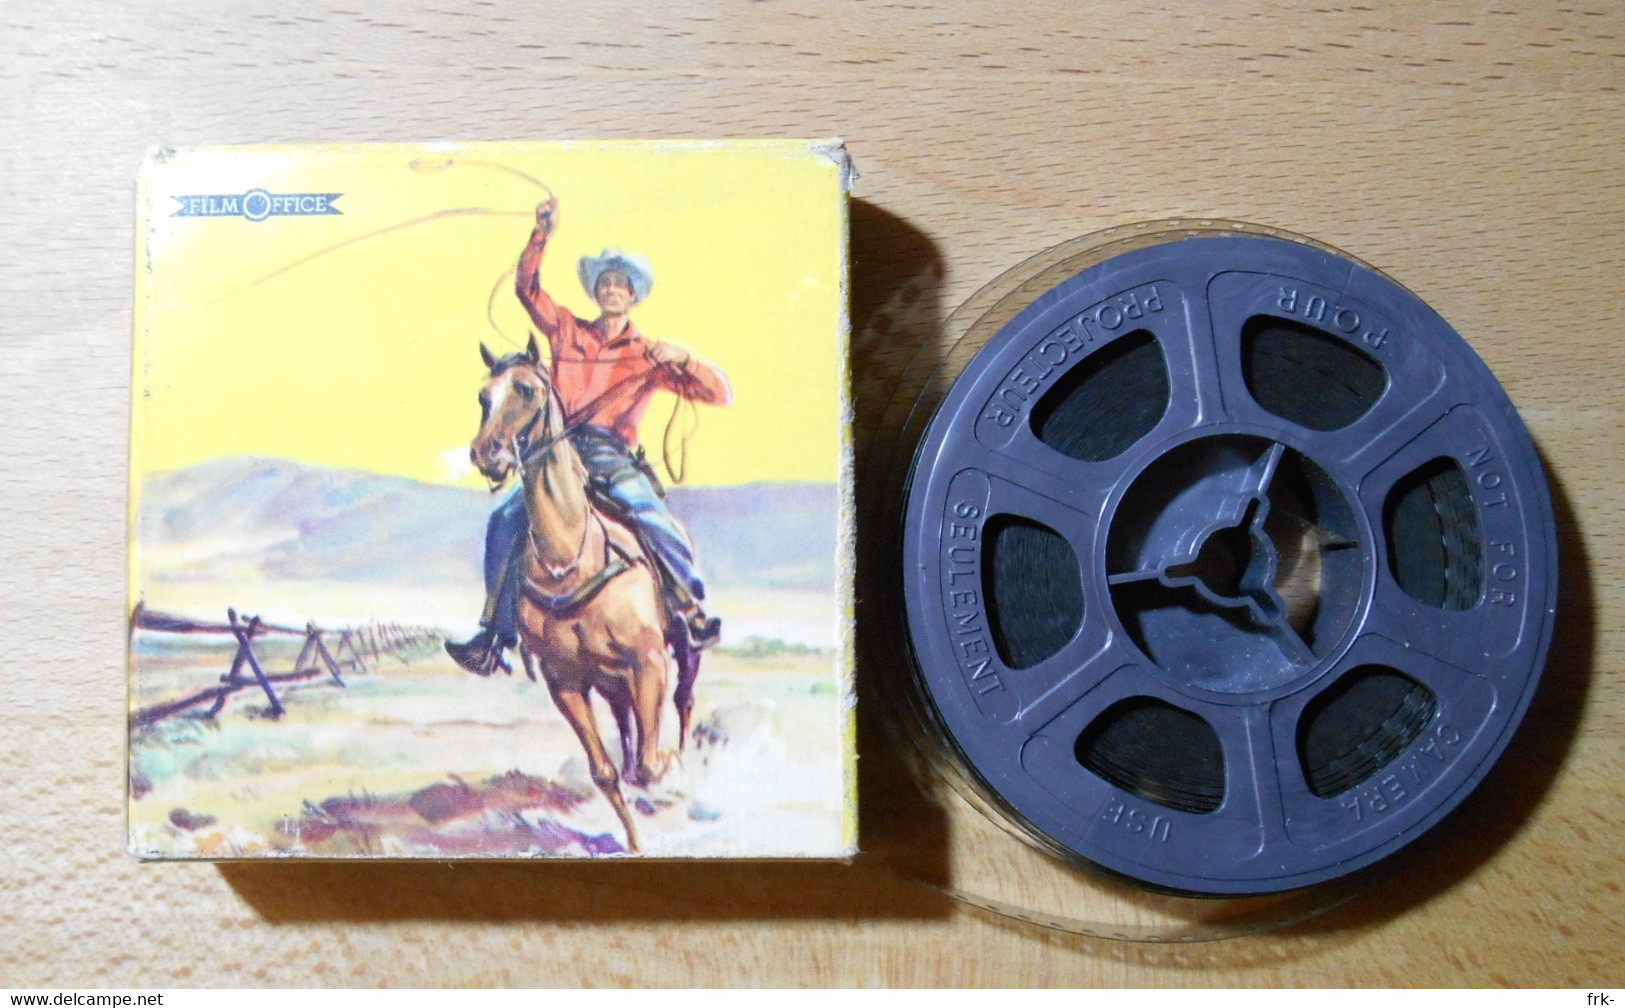 Wester Film Office Super 8 La Victoire Des Rangers - 35mm -16mm - 9,5+8+S8mm Film Rolls